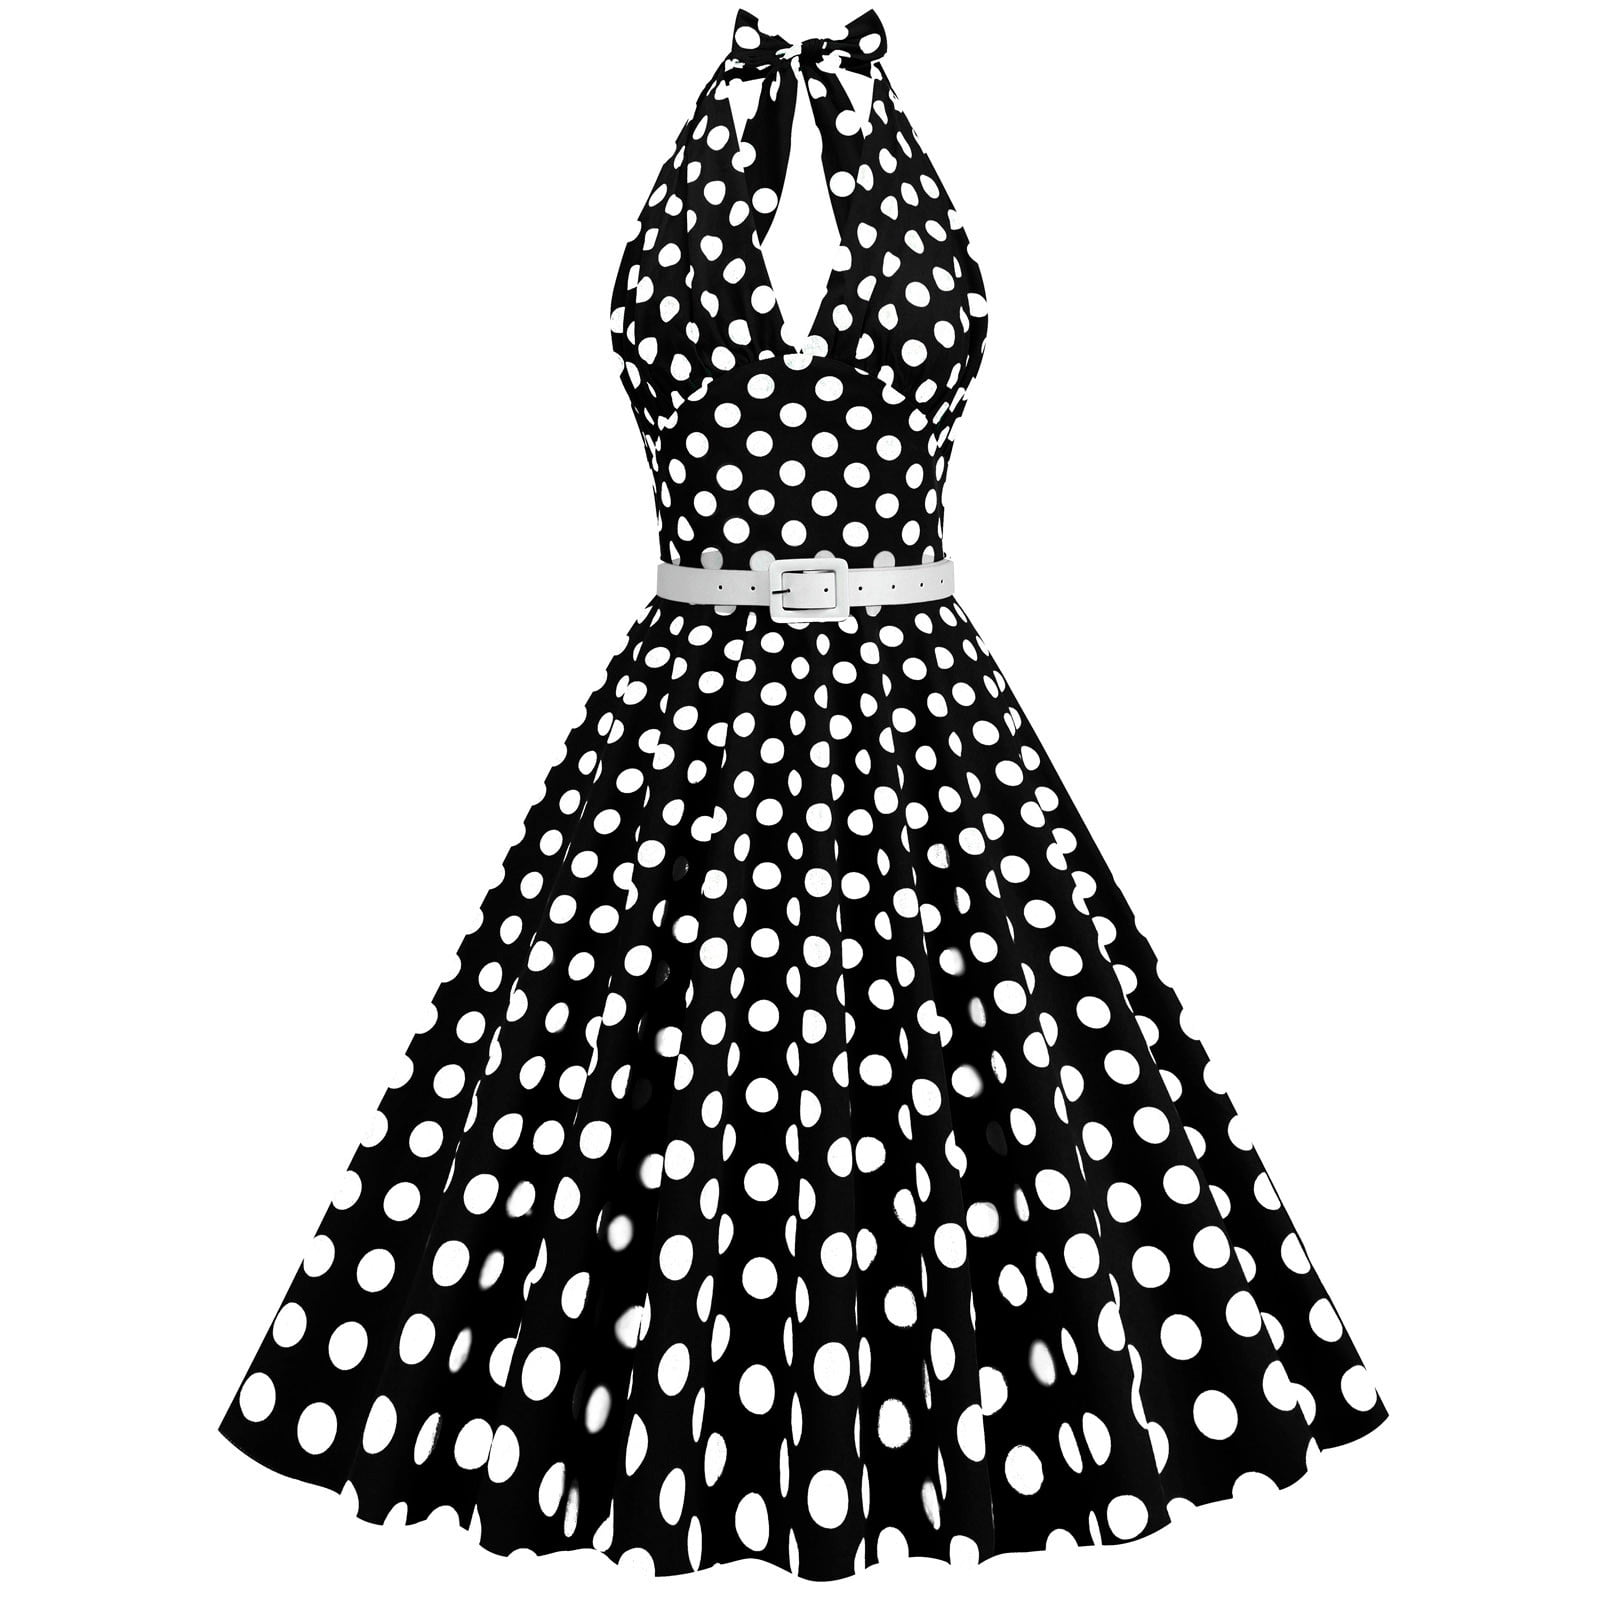 Wenini Clearance Dress Vintage Dress for Women Women 50s Vintage Polka ...